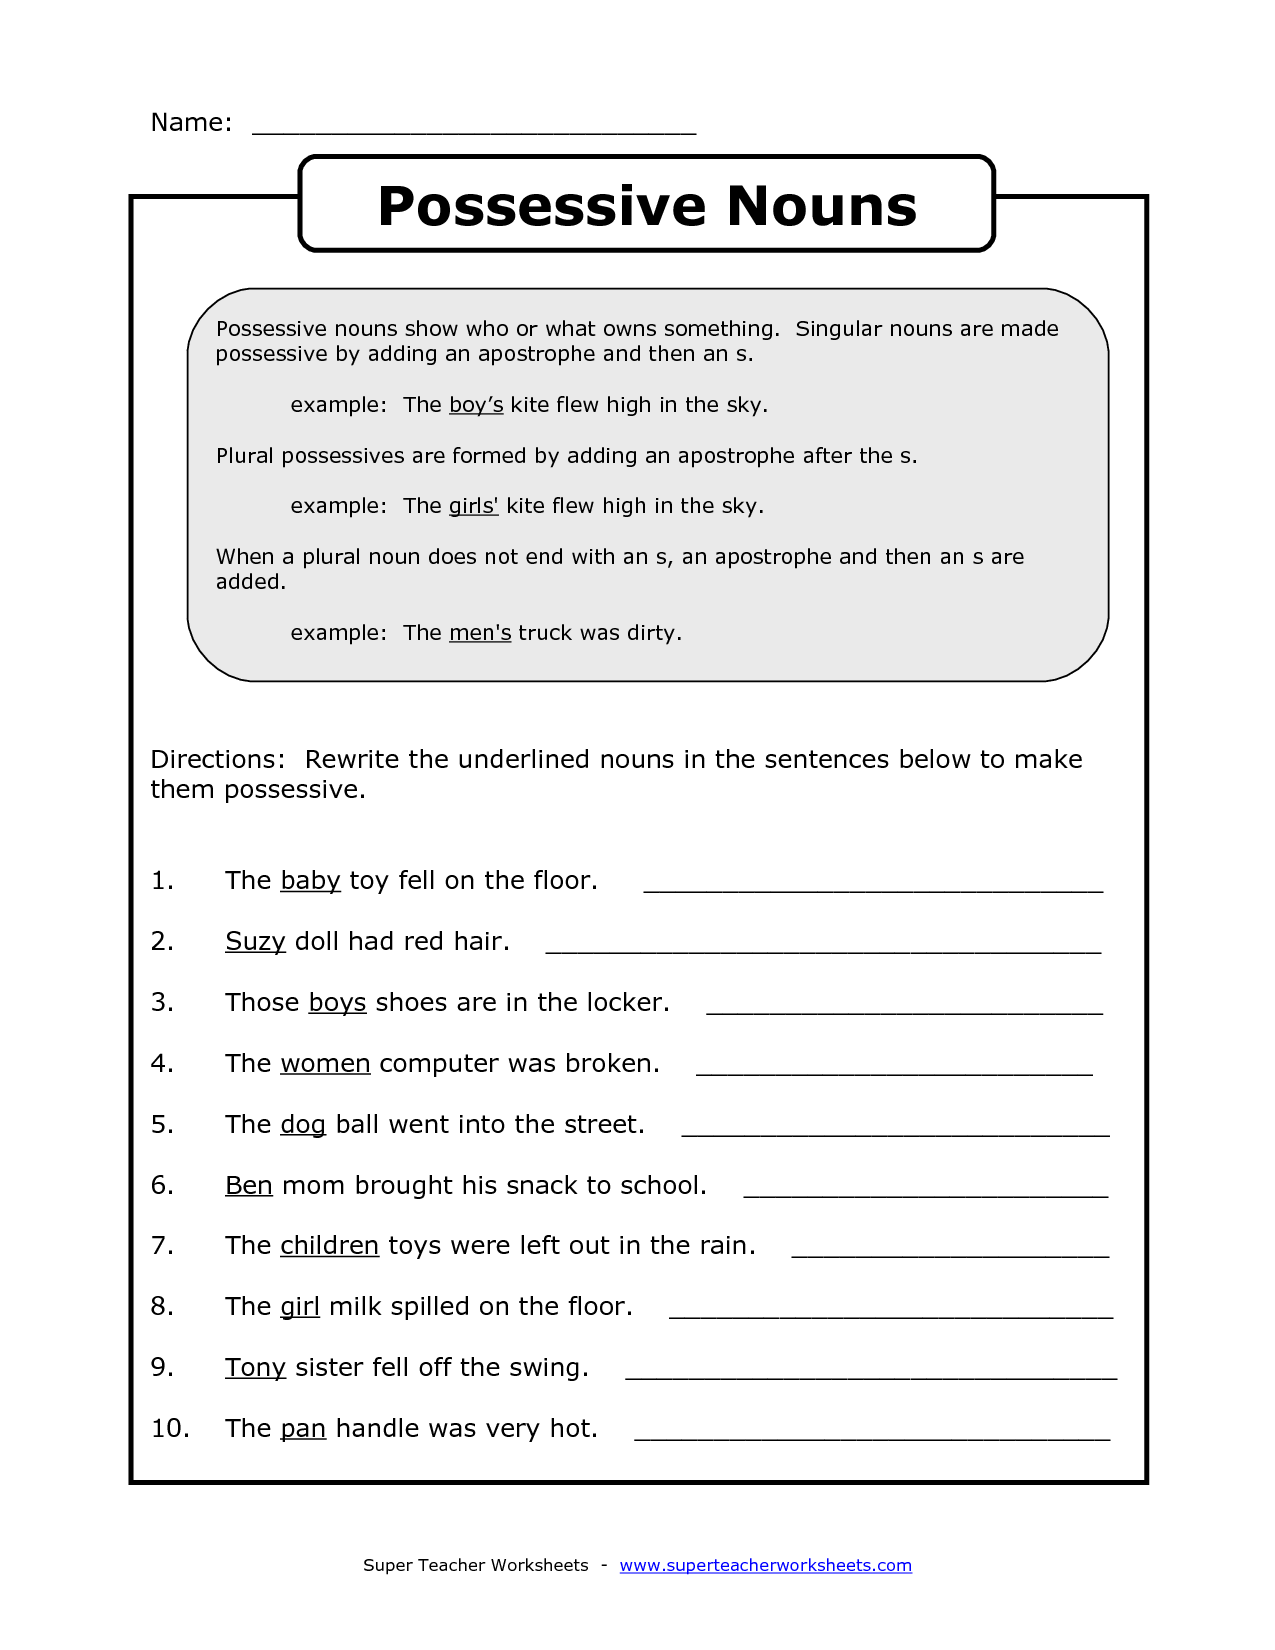 possessive-nouns-worksheet-singular-and-plural-nouns-all-esl-free-printable-possessive